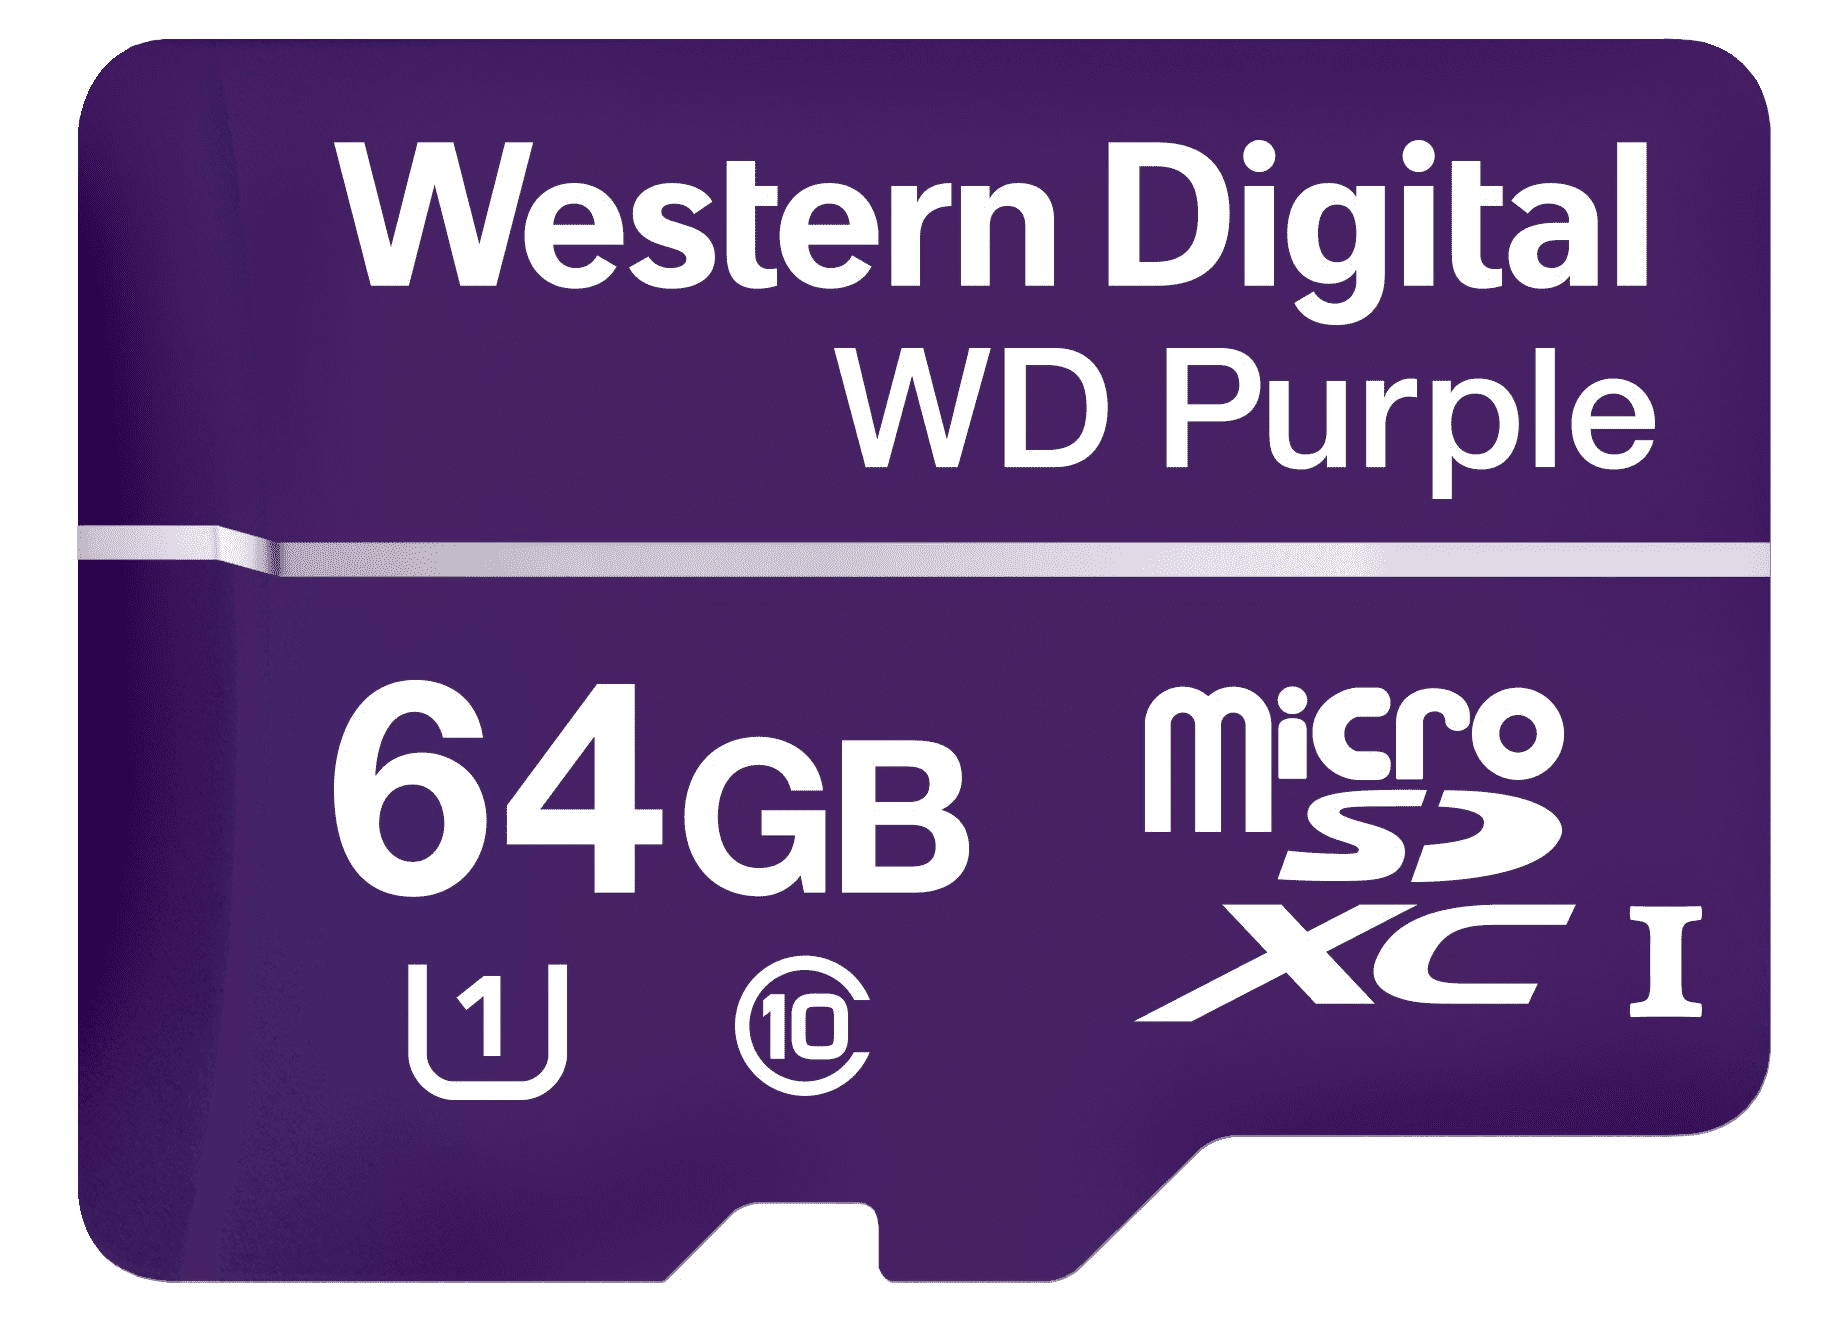 Western Digital | WD PURPLE MICRO SD CARD 64GB